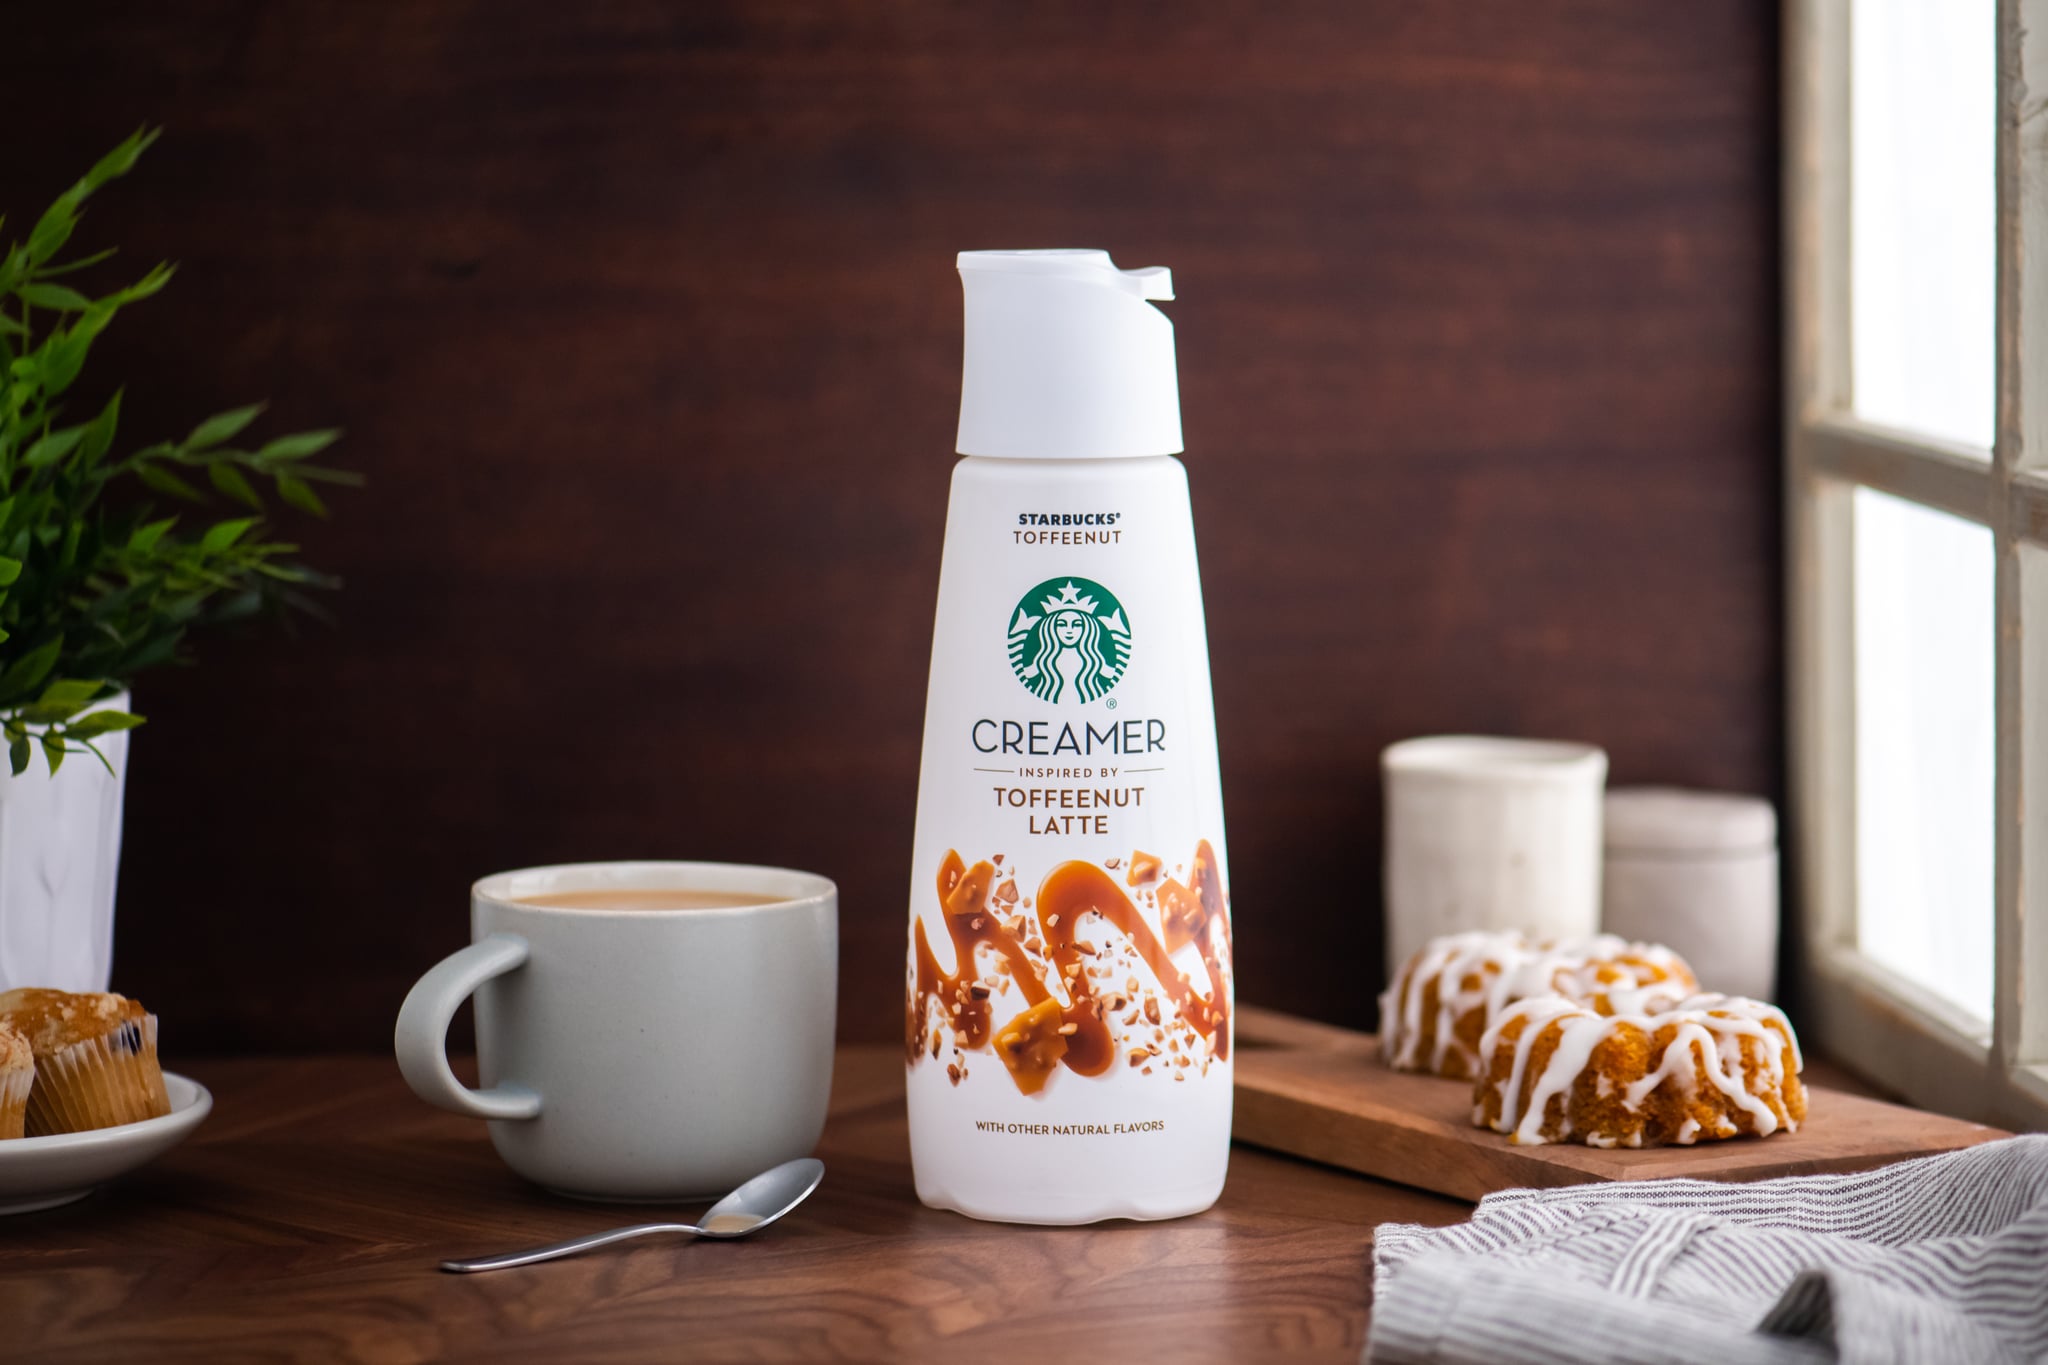 Starbucks Mystery Coffee Creamer Flavor Has Been Revealed